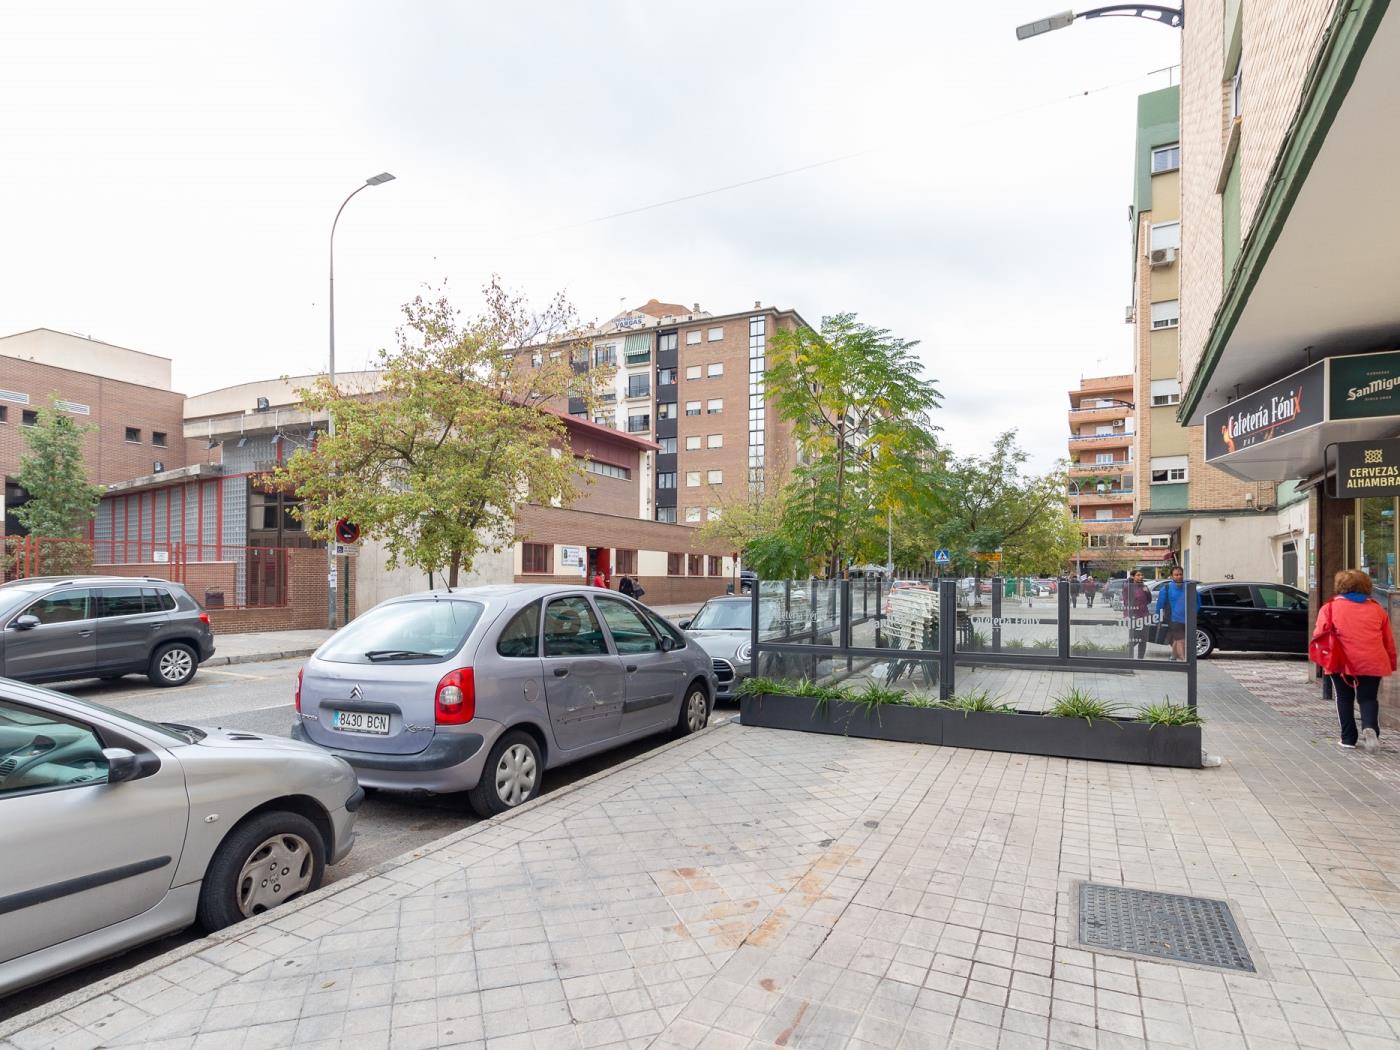 Commercial space of 44 m2 ready to move in on Pintor Maldonado Street 6, Granada in Granada